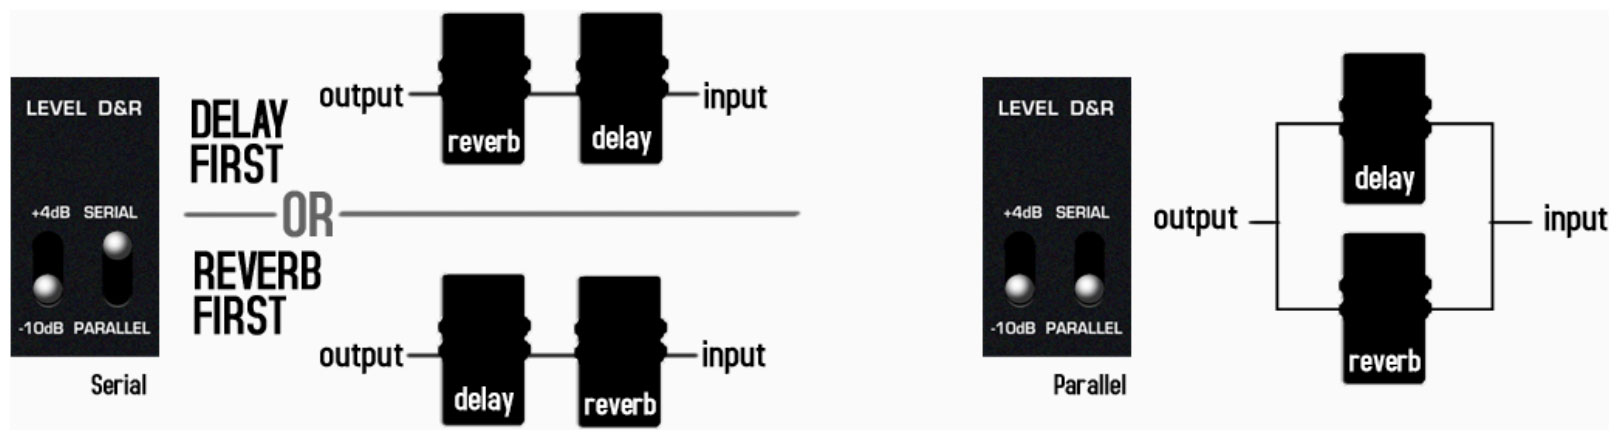 Nux Atlantic Ndr-5 Delay Reverb Verdugo - Reverb/delay/echo effect pedaal - Variation 4